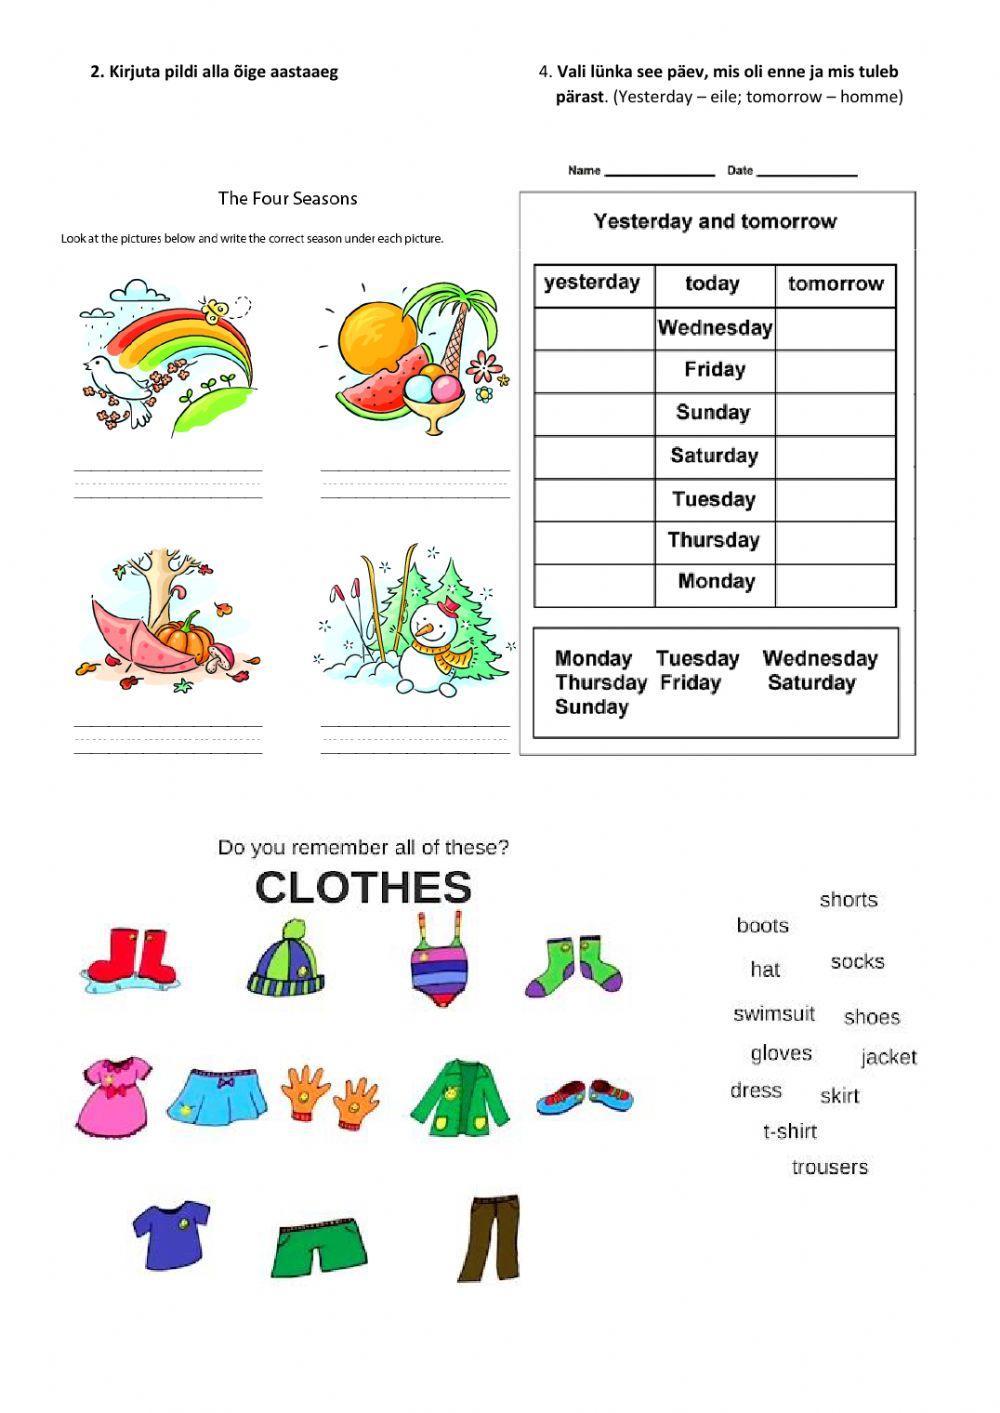 English Revision: clothes, days, seasons, body parts